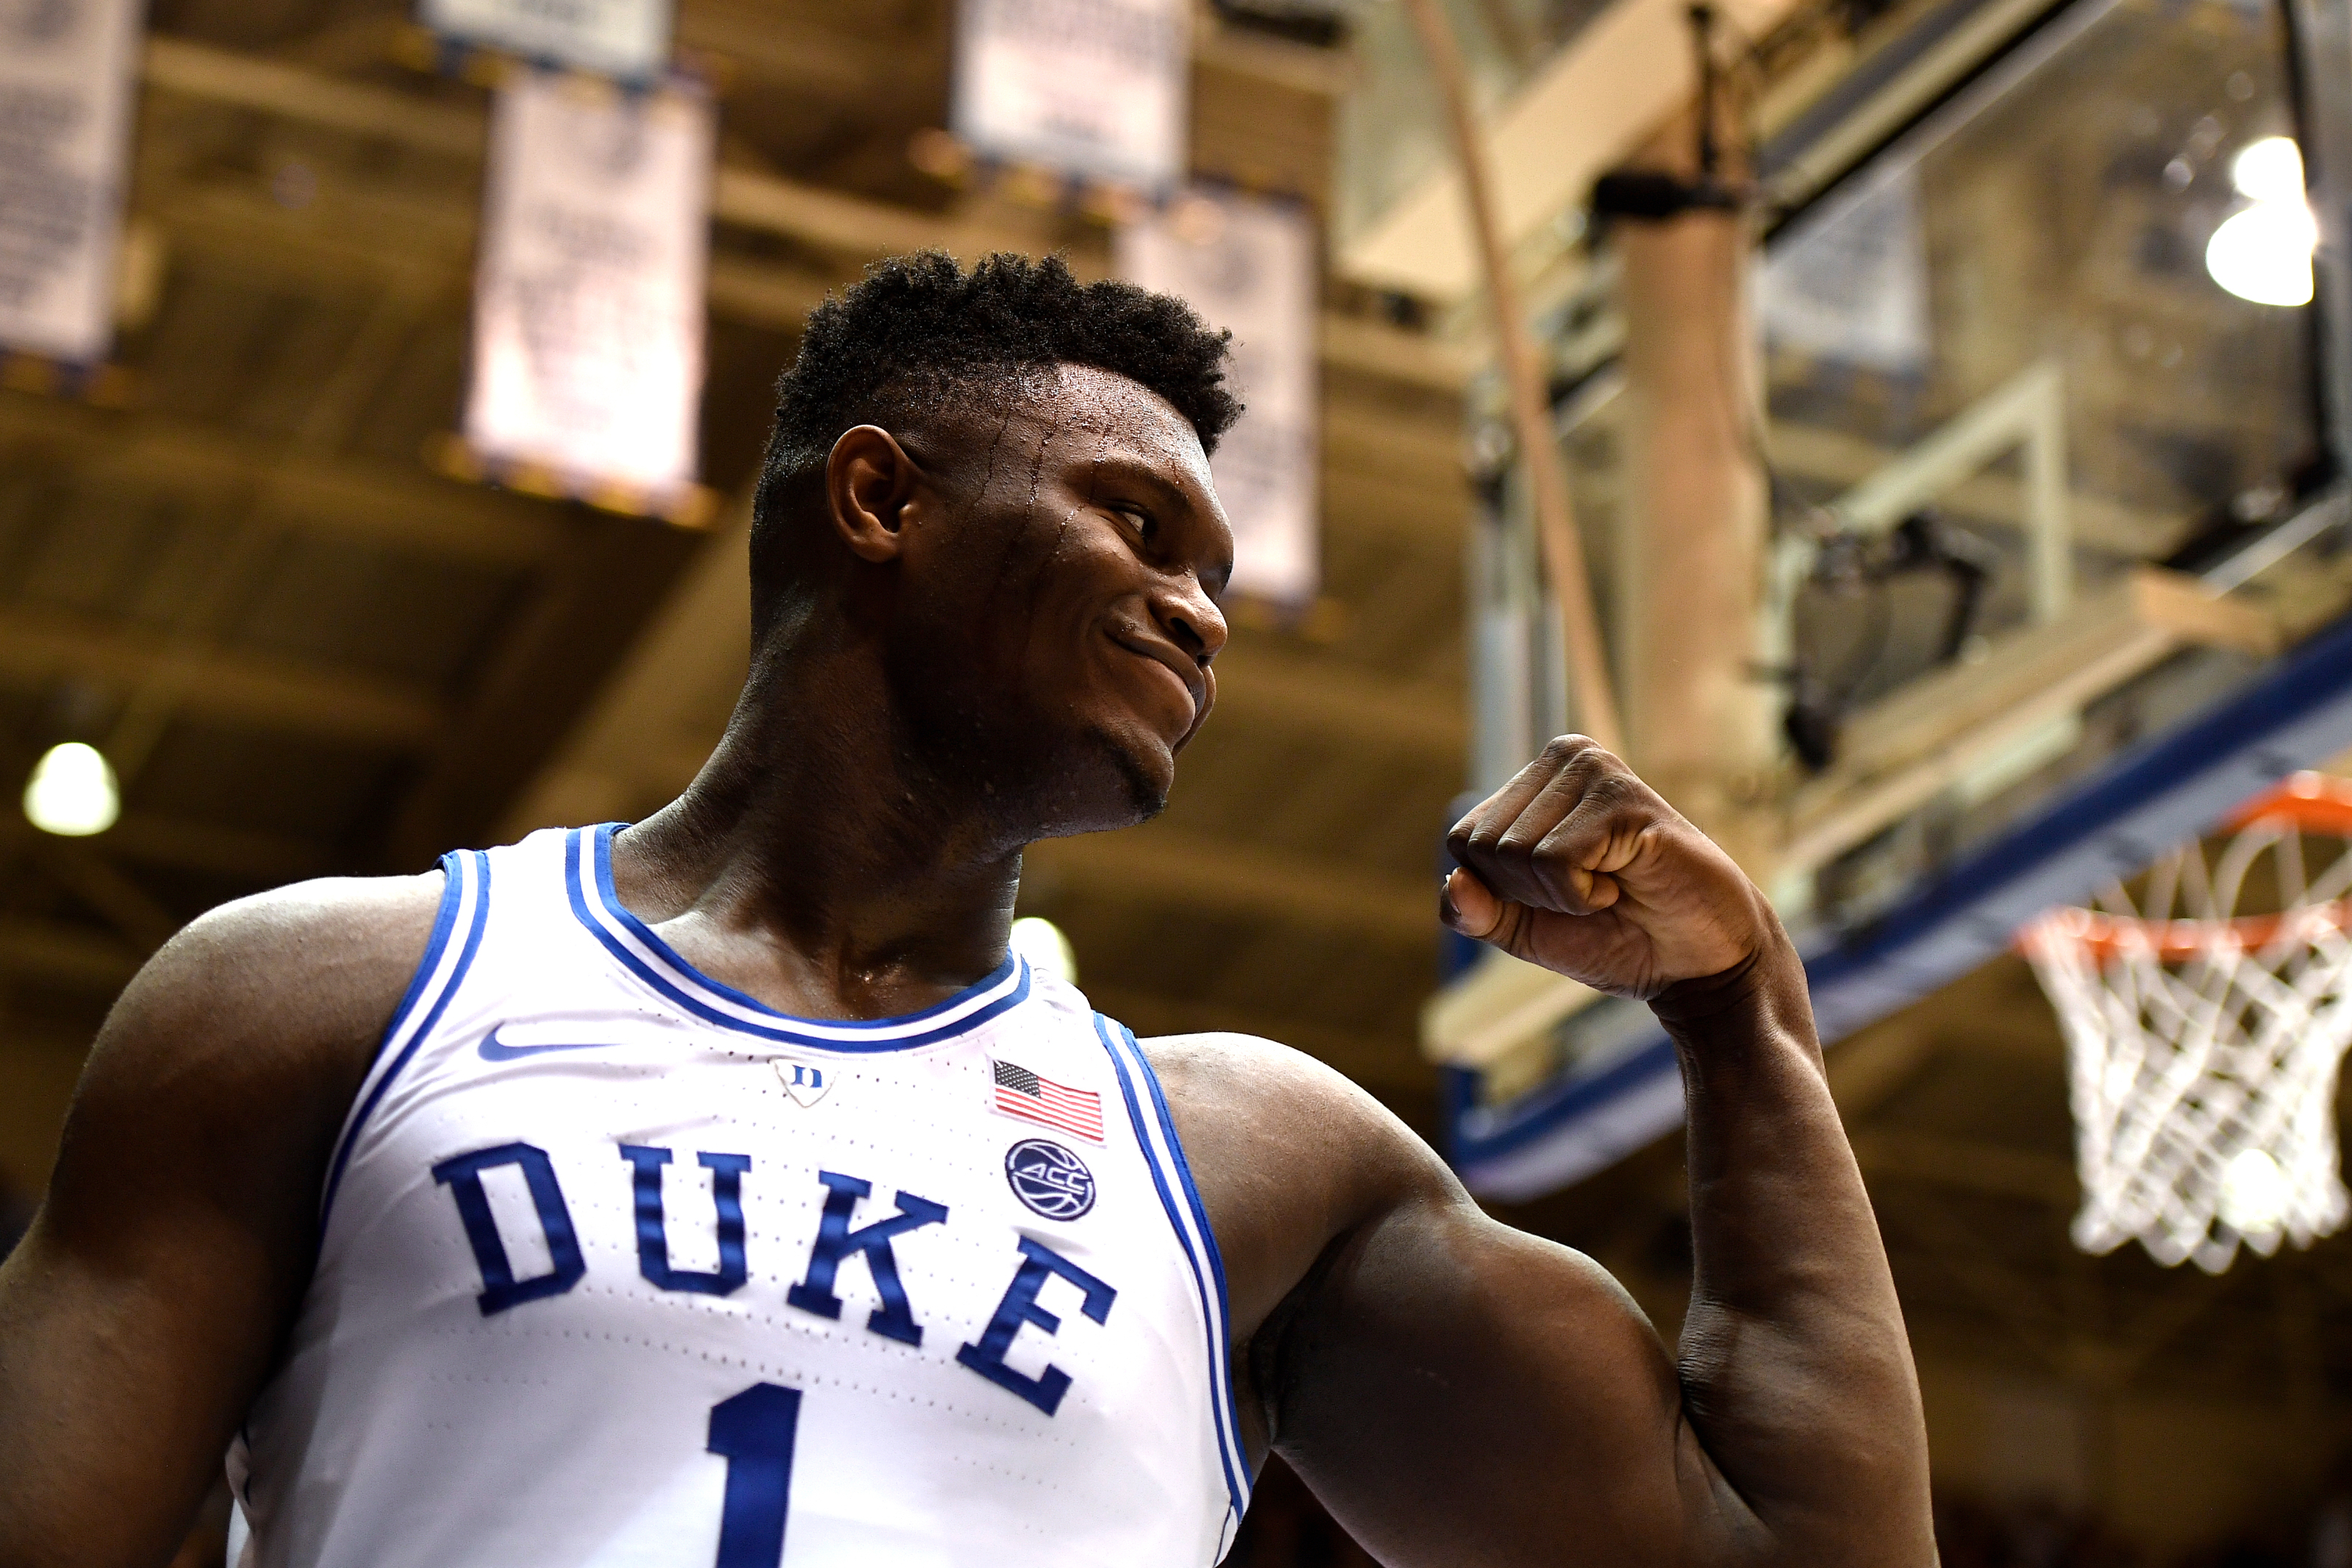 NBA DRAFT: Duke's Kyrie Irving goes first in draft